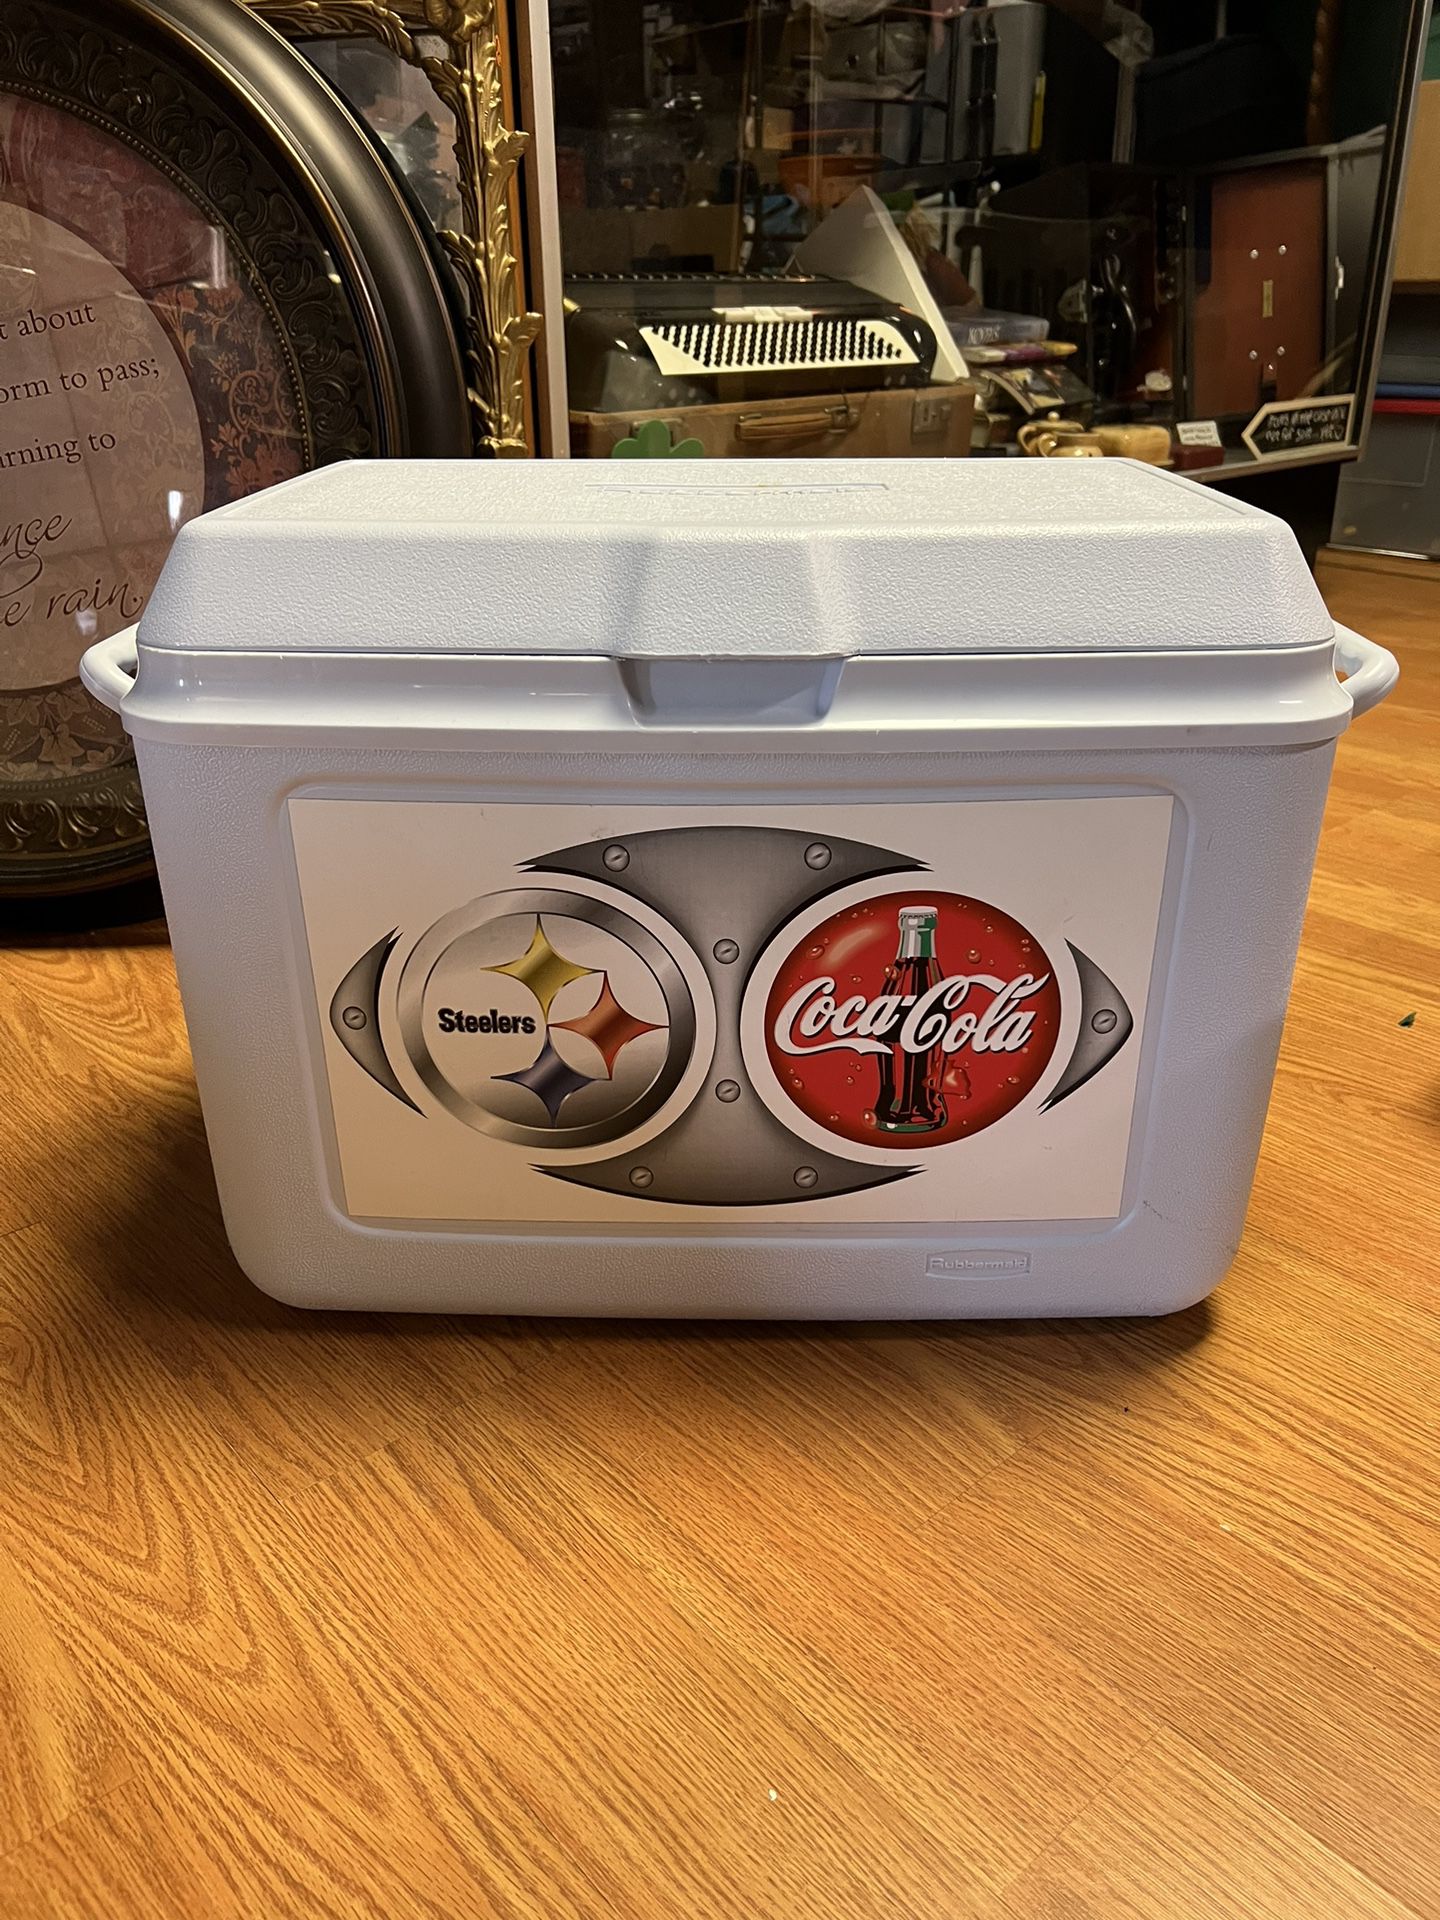 Rubbermaid Steelers / Coca-Cola Cooler